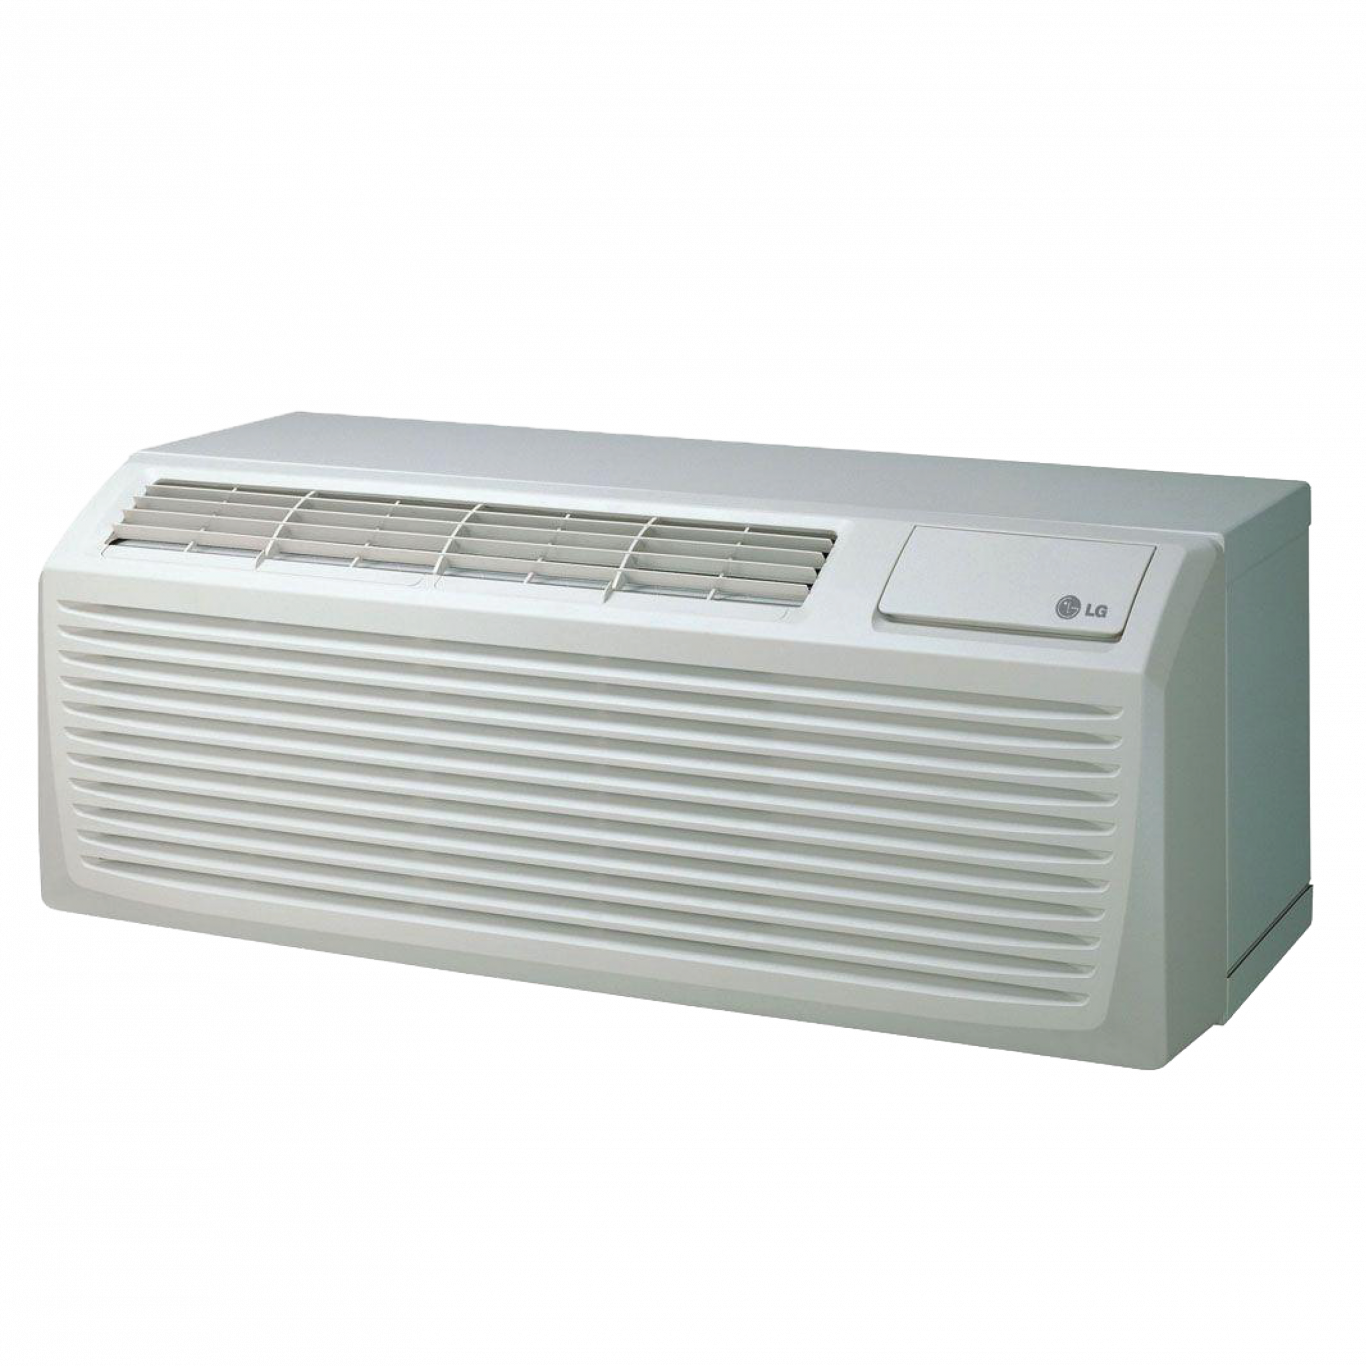 LG AC w/ Heat Pump - 7000 to 9000 BTU